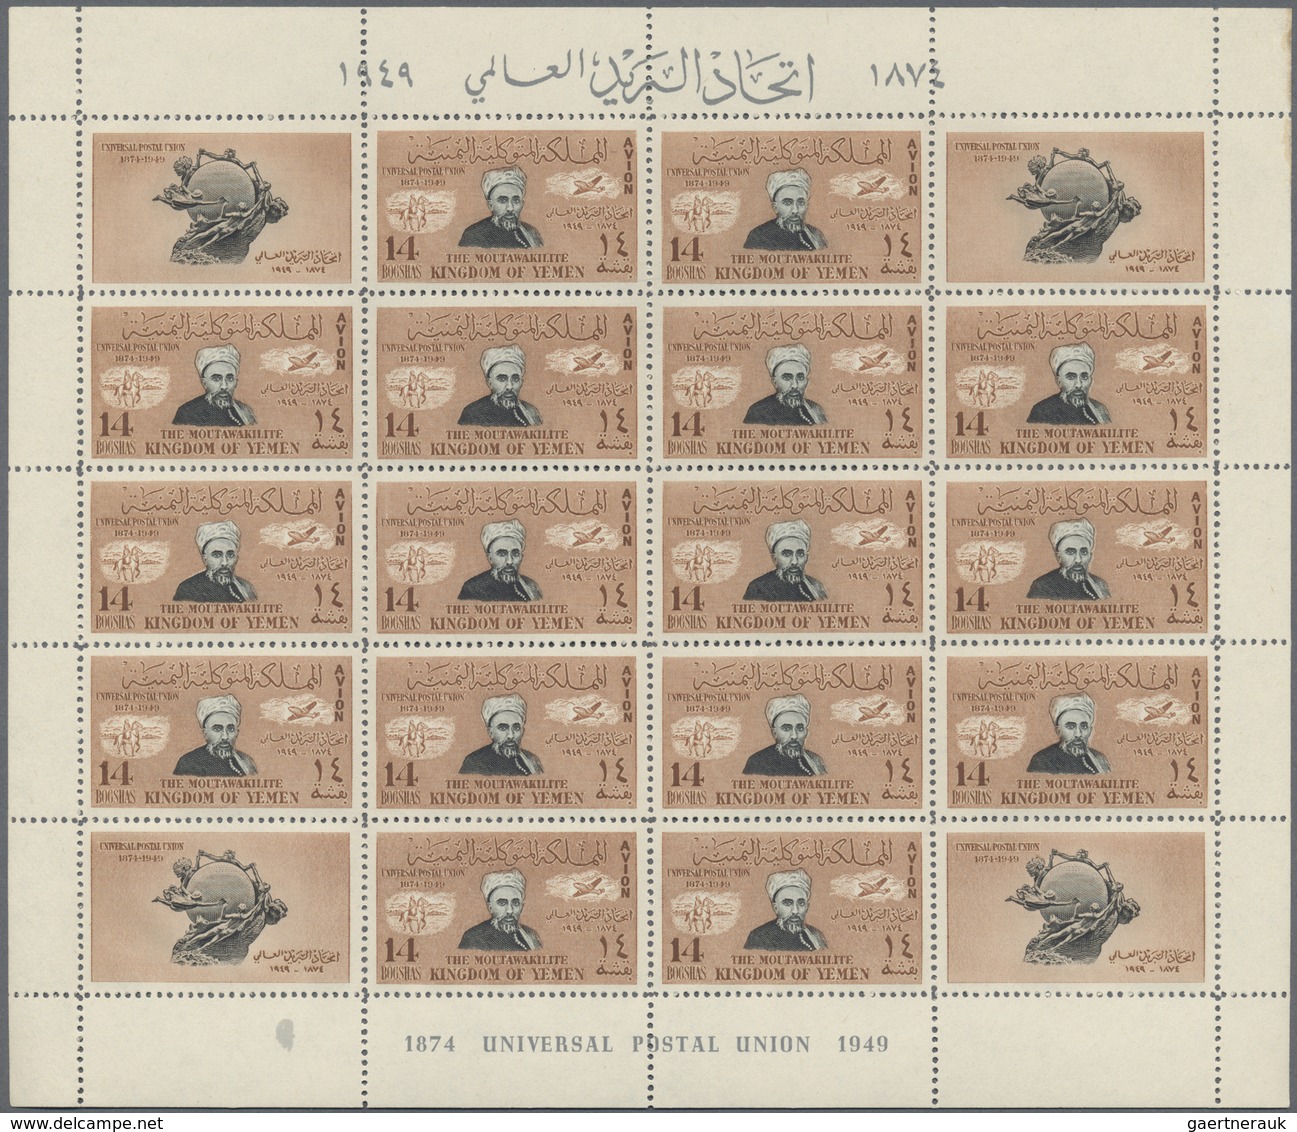 ** Jemen: 1950, 75th anniversary of the Universal Postal Union (UPU) complete set of eight different va